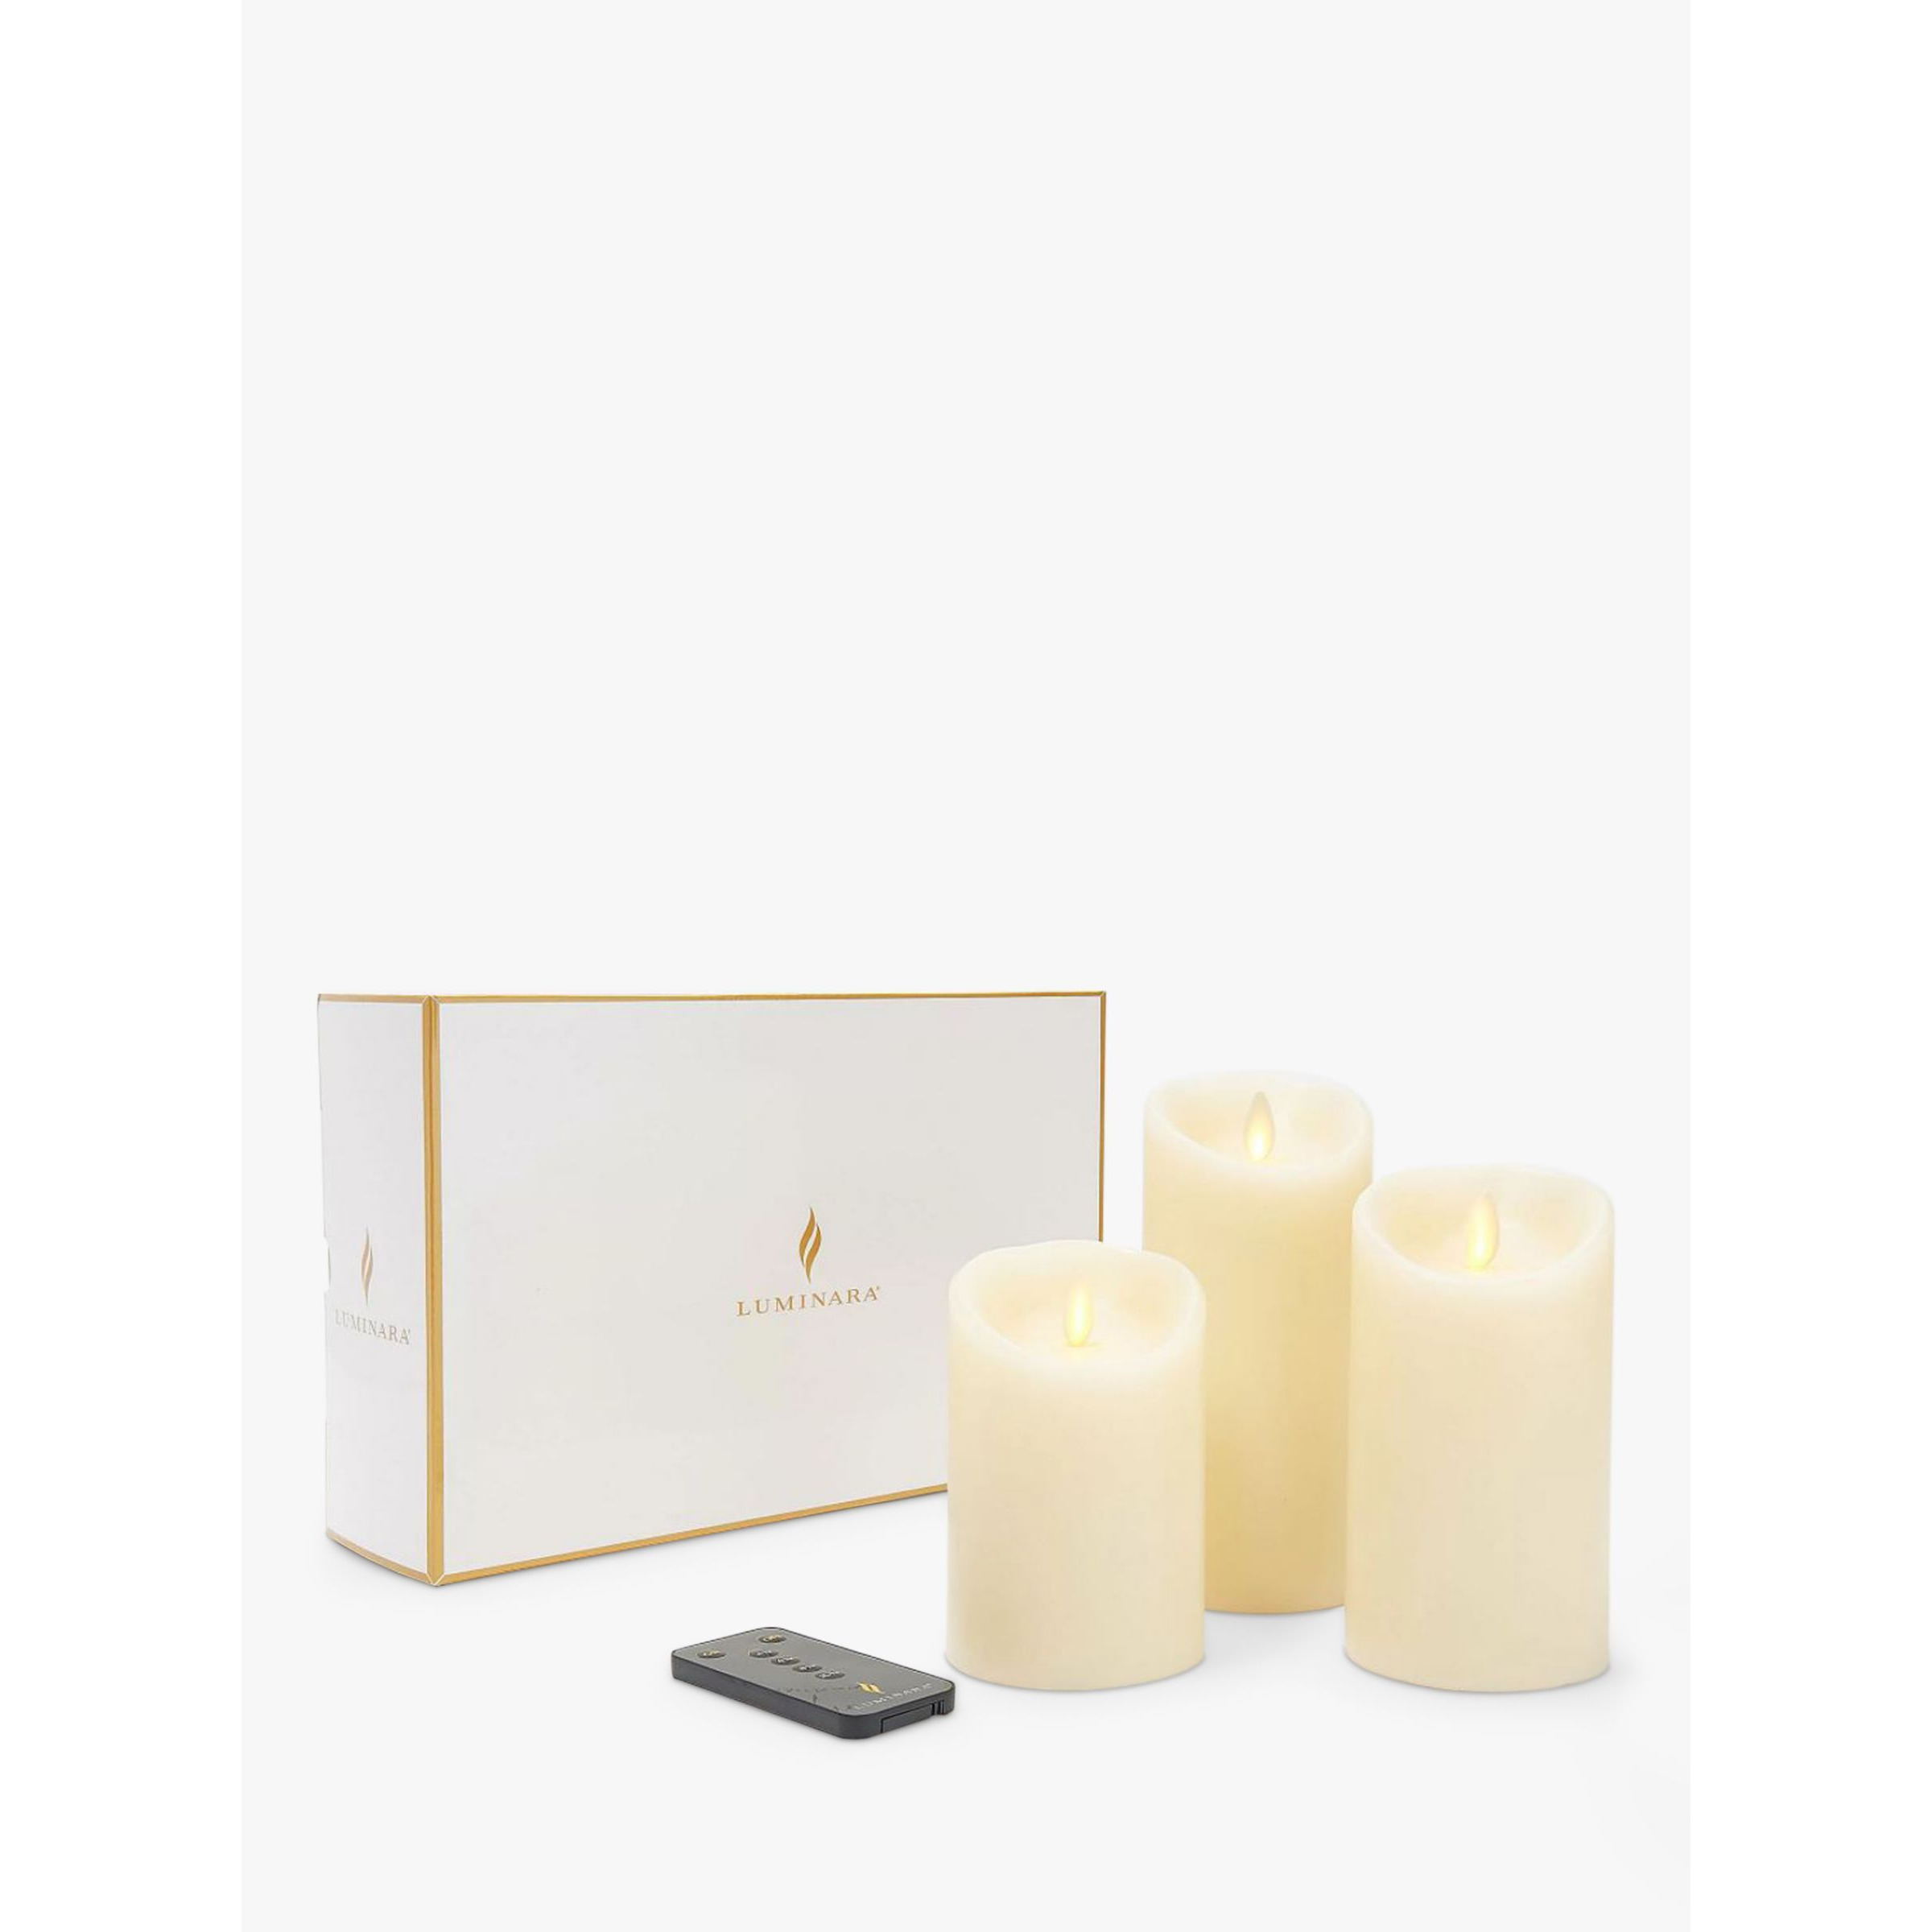 Luminara LED Wax Pillar Candles, Set of 3, Ivory - image 1